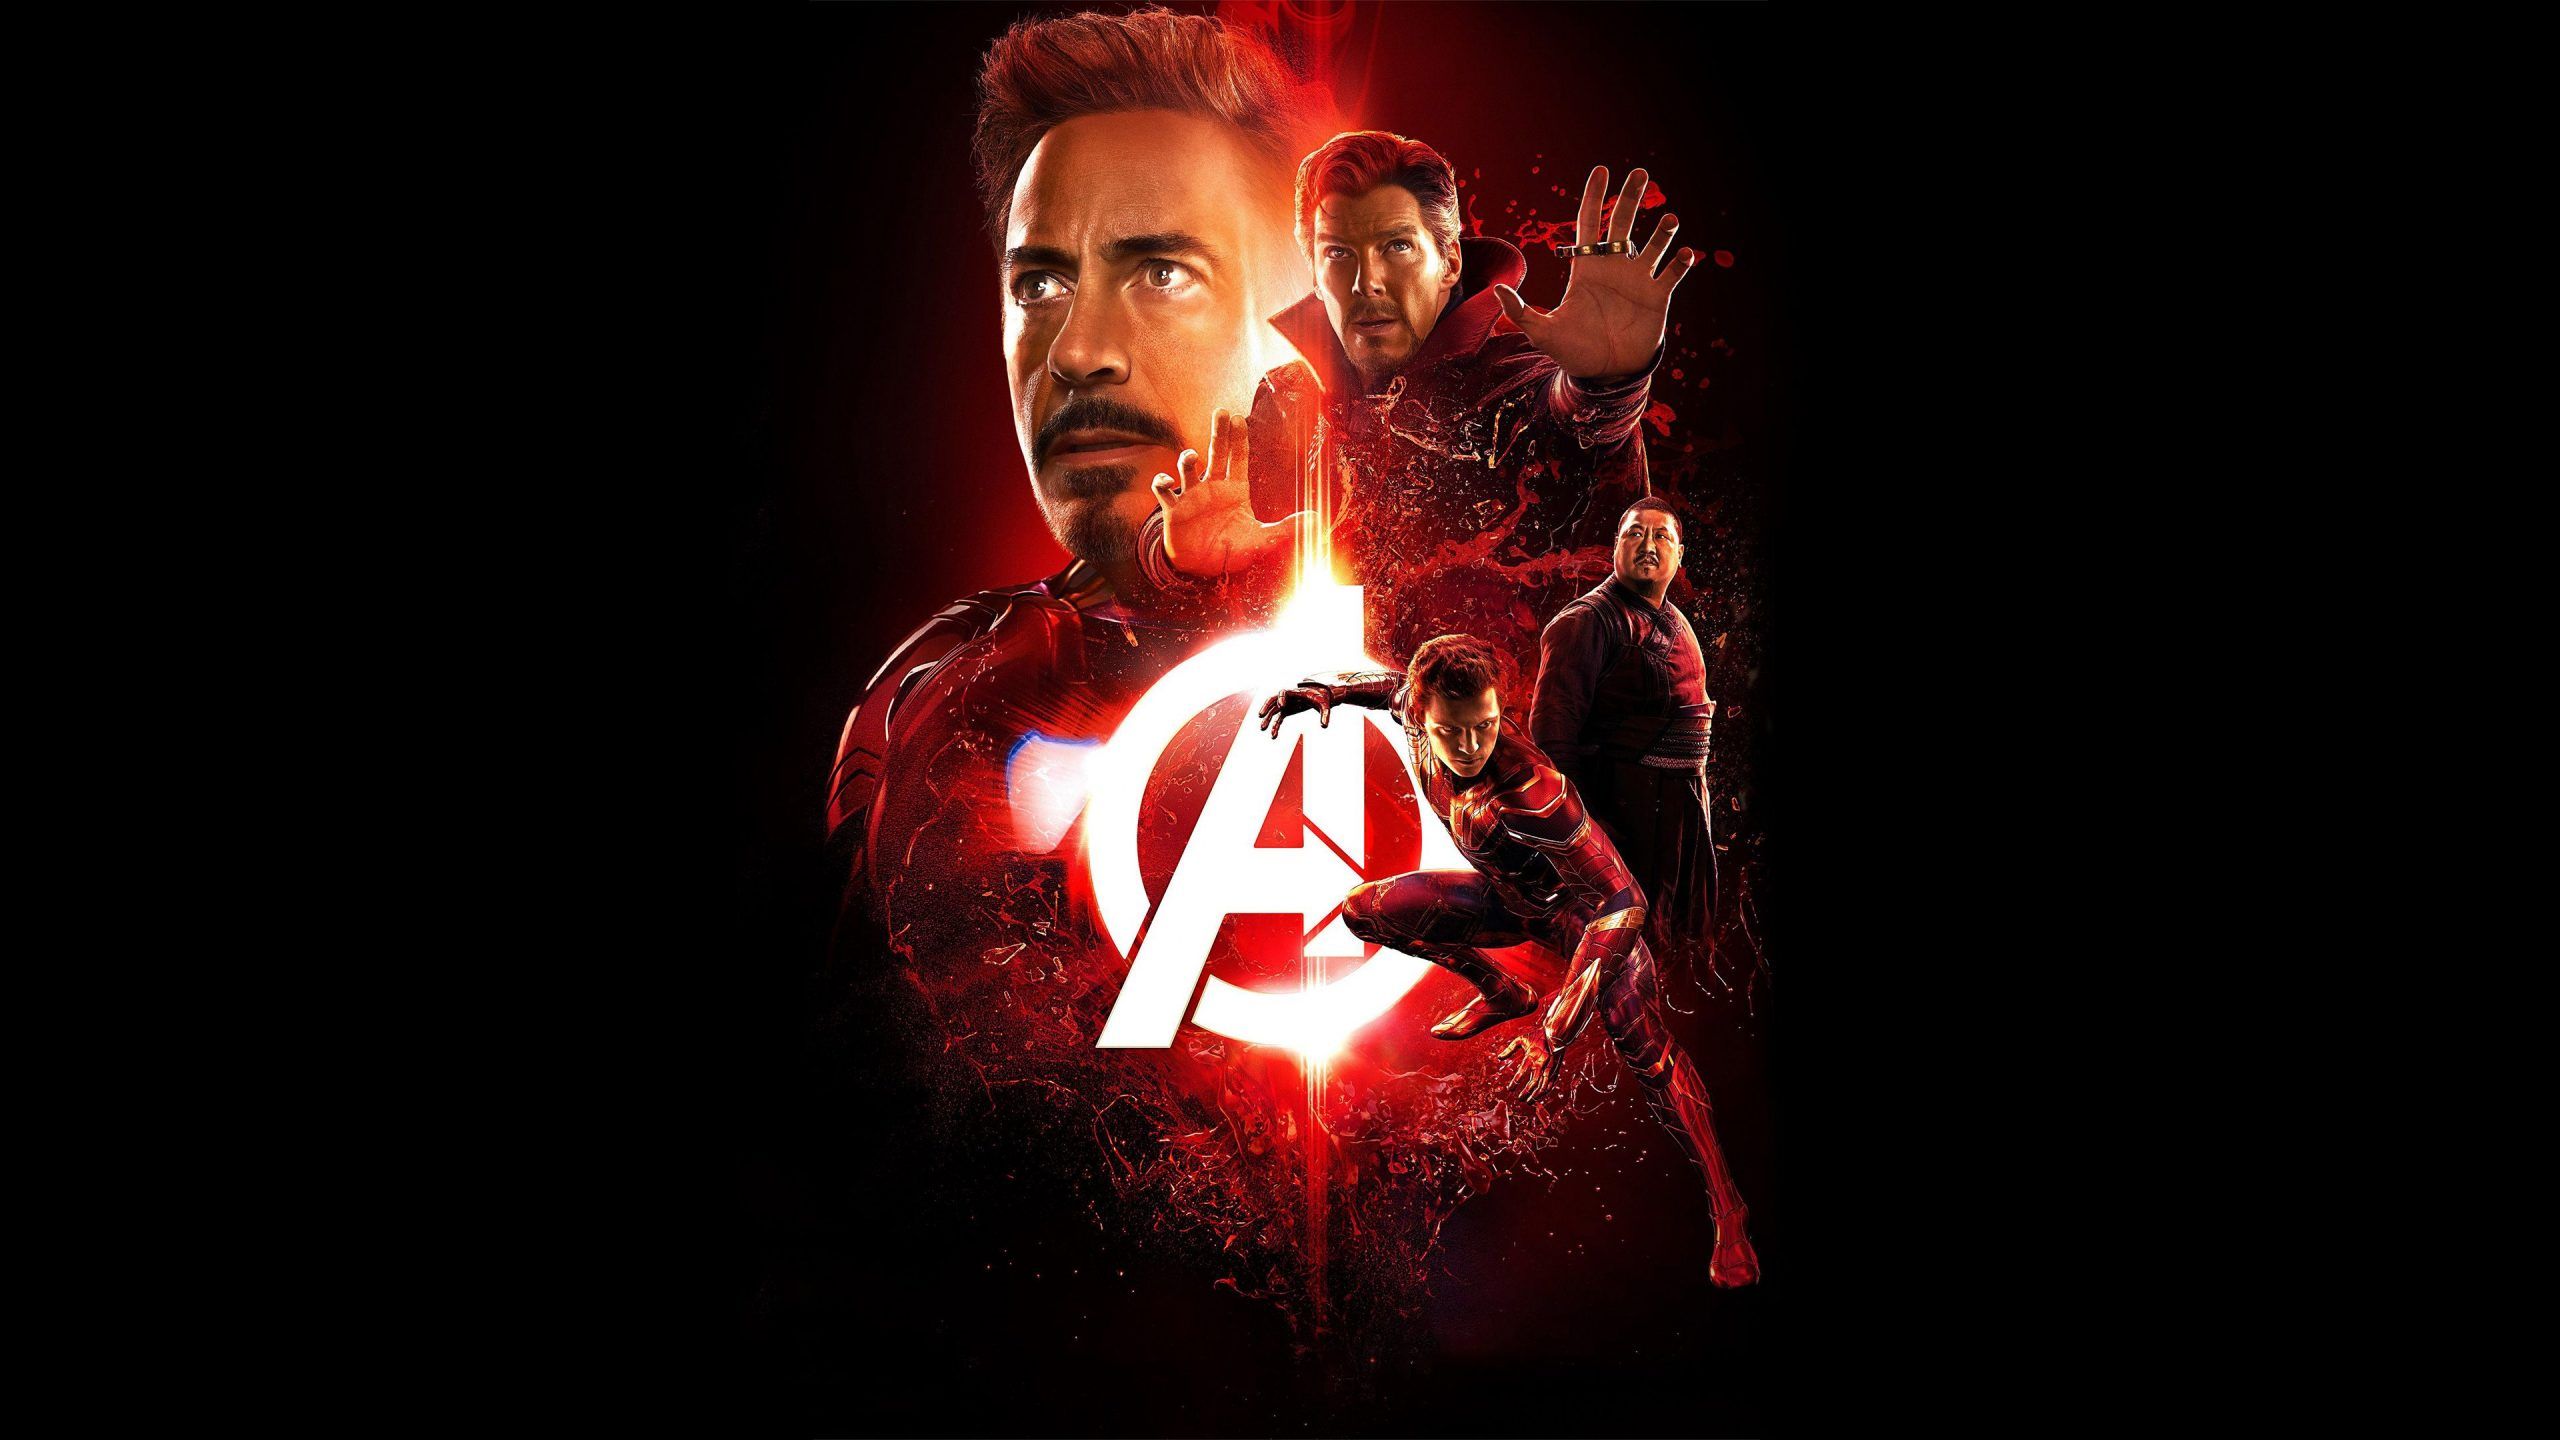 Avengers Infinity War 4k Ultra HD Wallpaper And Background Wallpaper